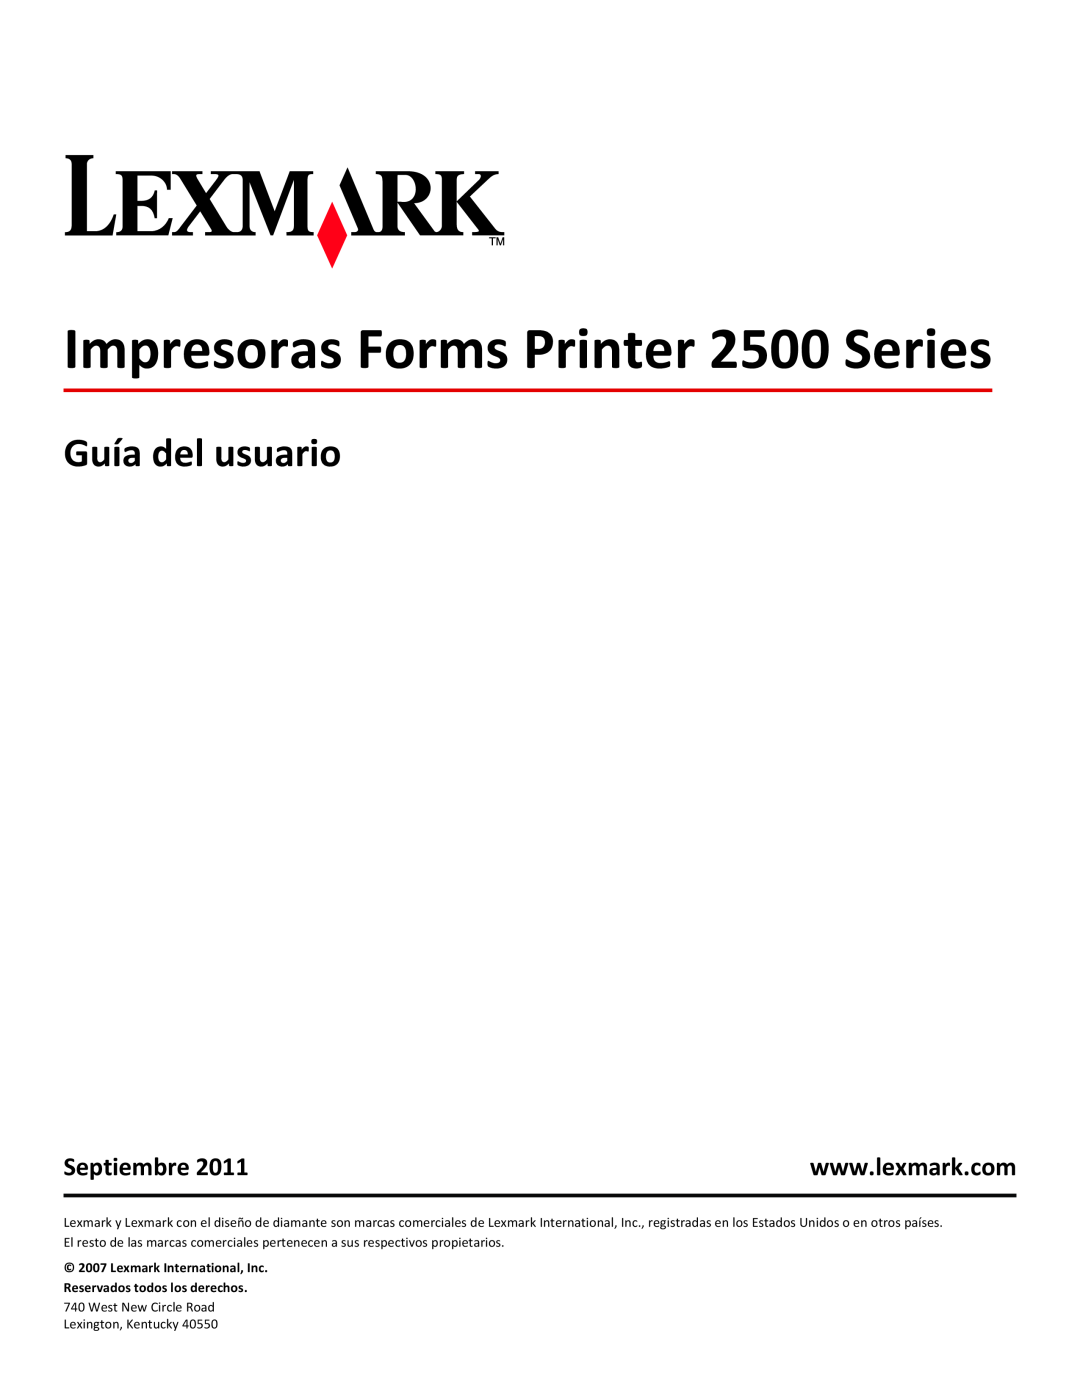 Lexmark manual Users Guide, January, Forms Printer 2500 Series 